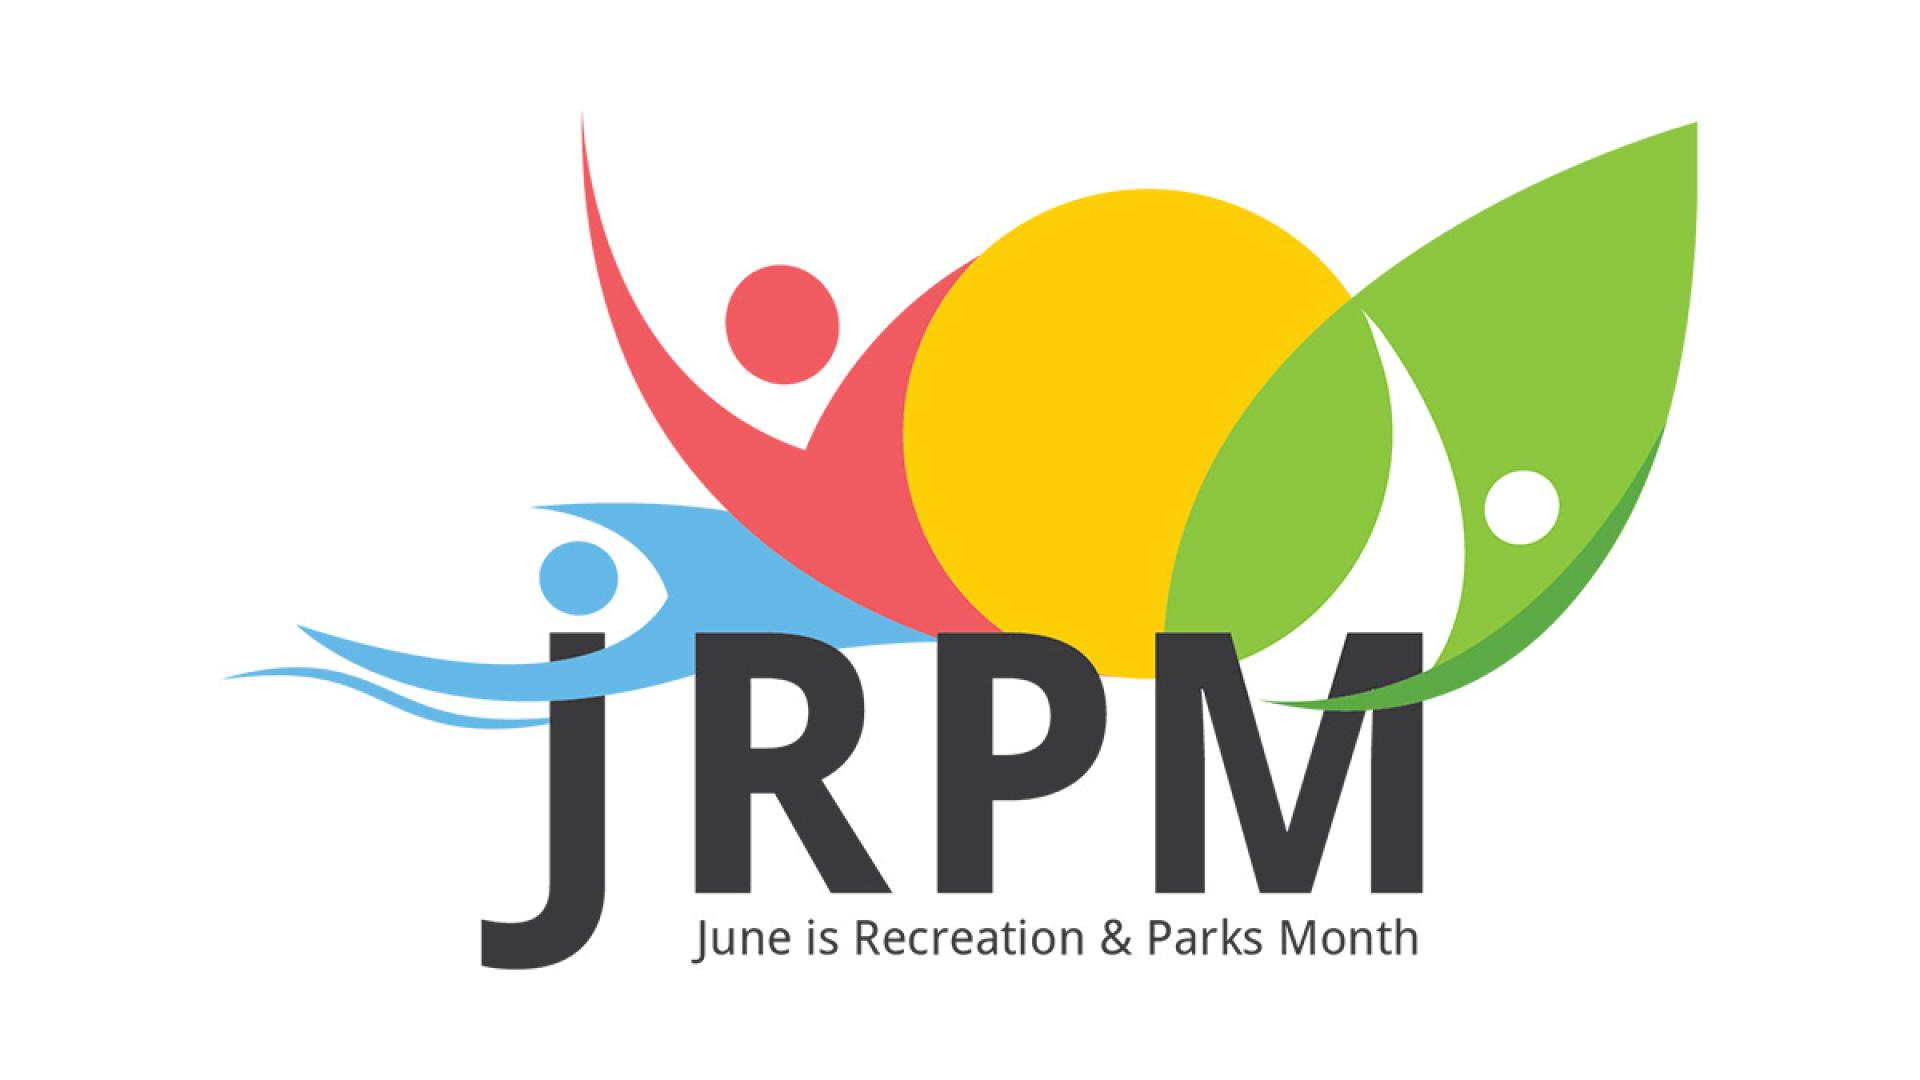 June is Recreation & Parks Month logo